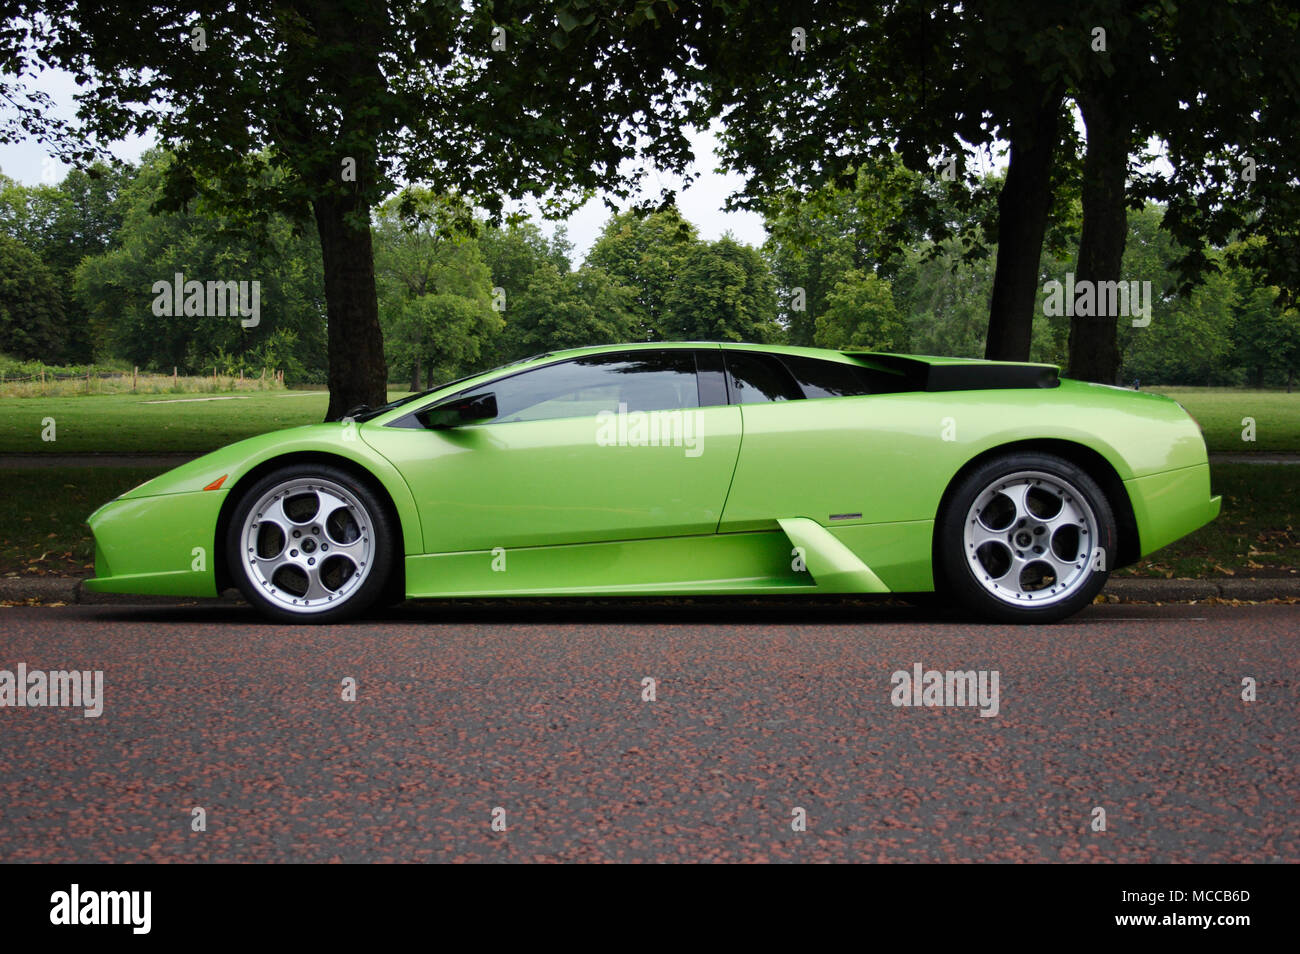 Lime green Lamborghini Murcielago supercar or hypercar in profile (side view) Stock Photo